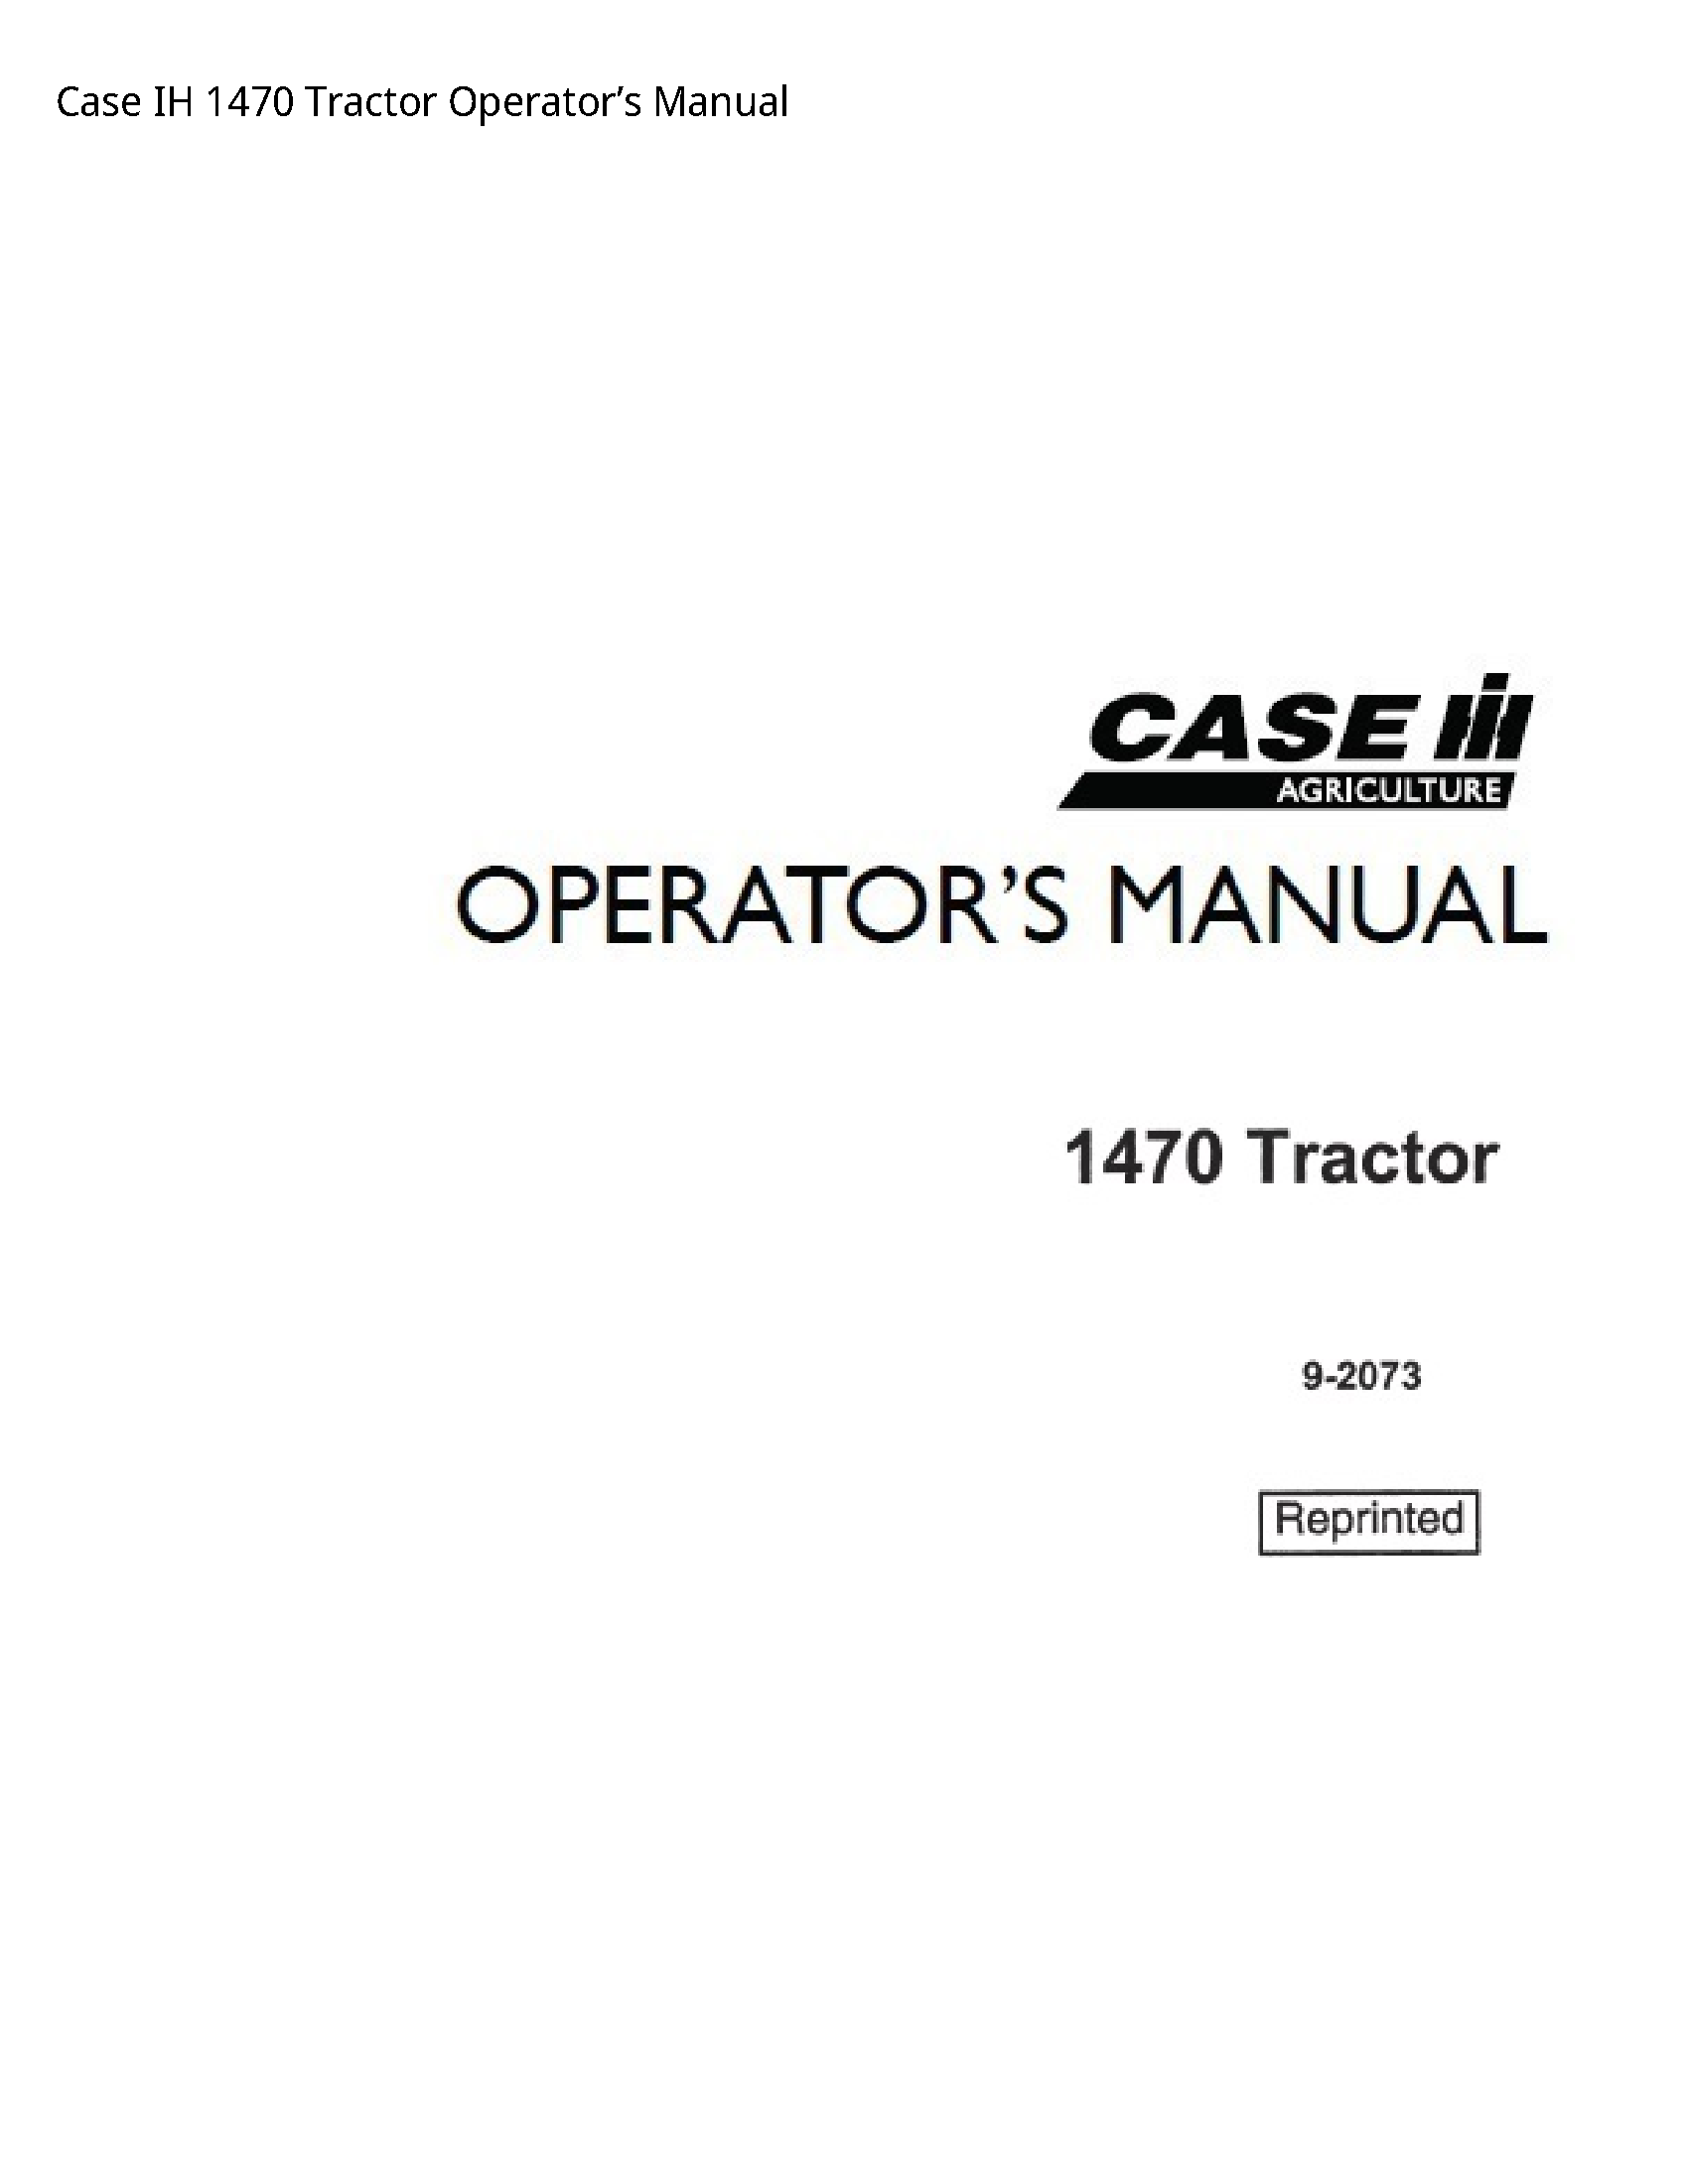 Case/Case IH 1470 IH Tractor Operator’s manual